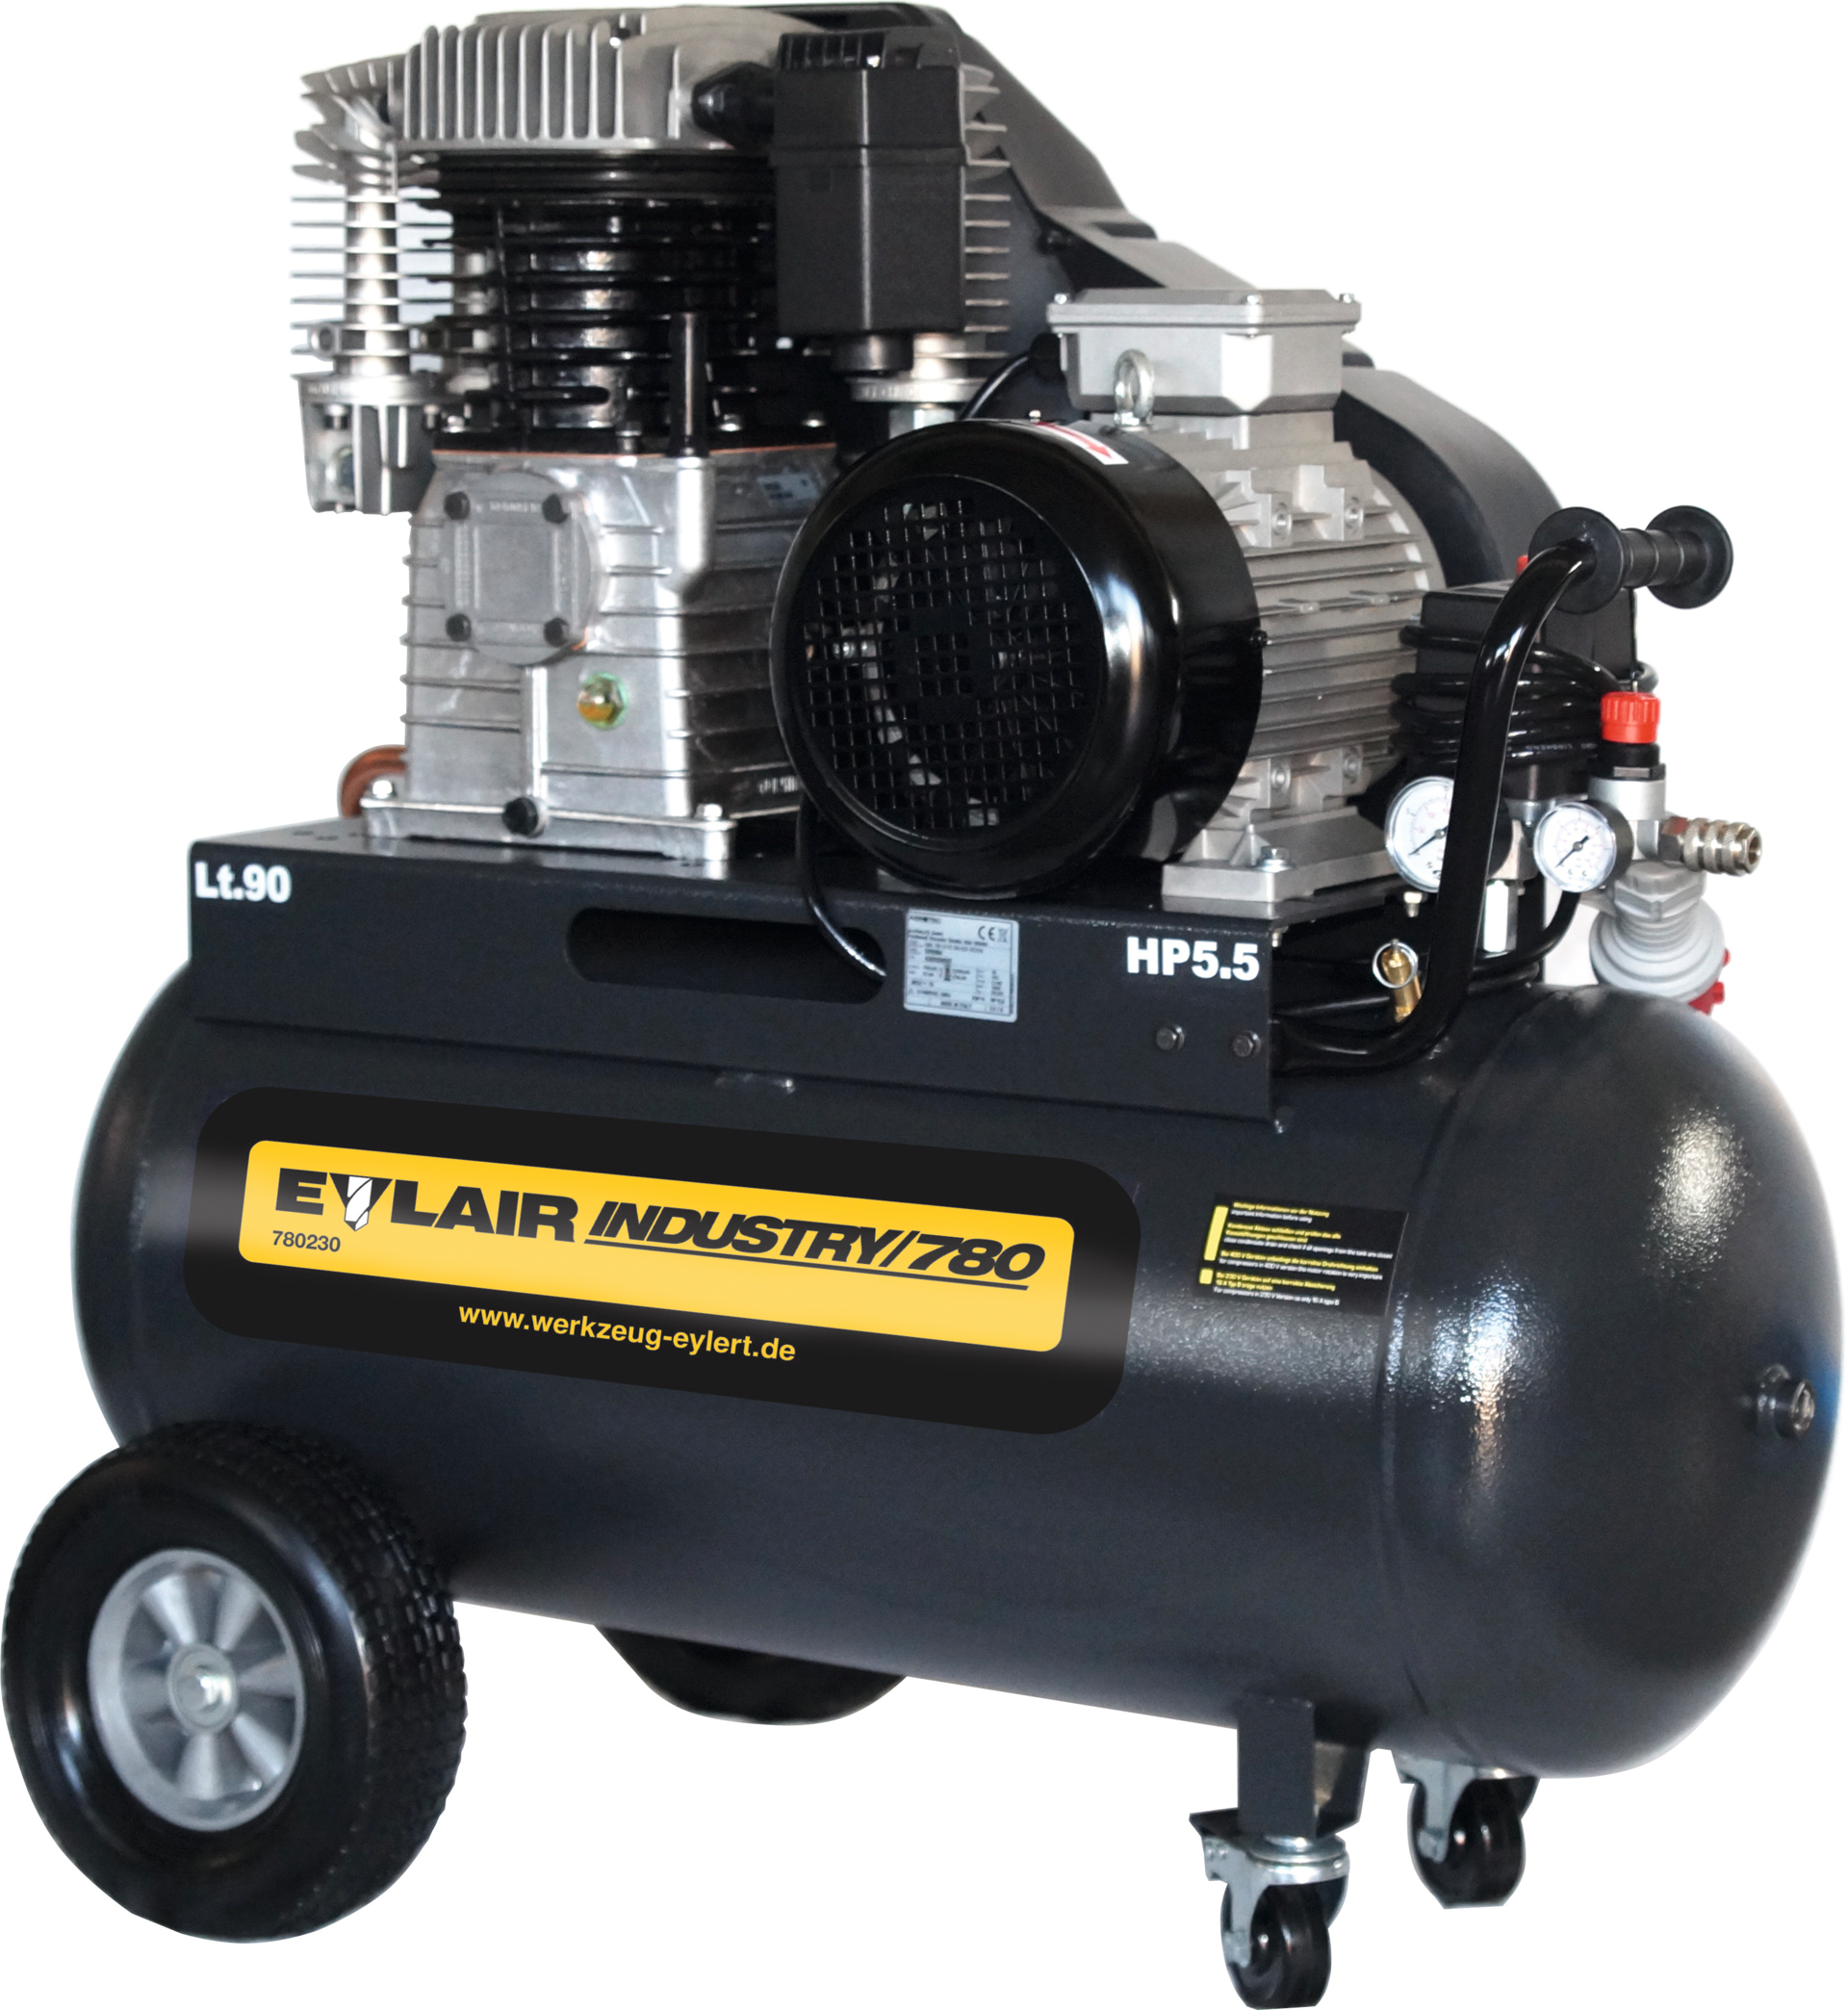 Kolbenkompressor fahrbar Eylair Industrie/780 90 Liter 10 bar